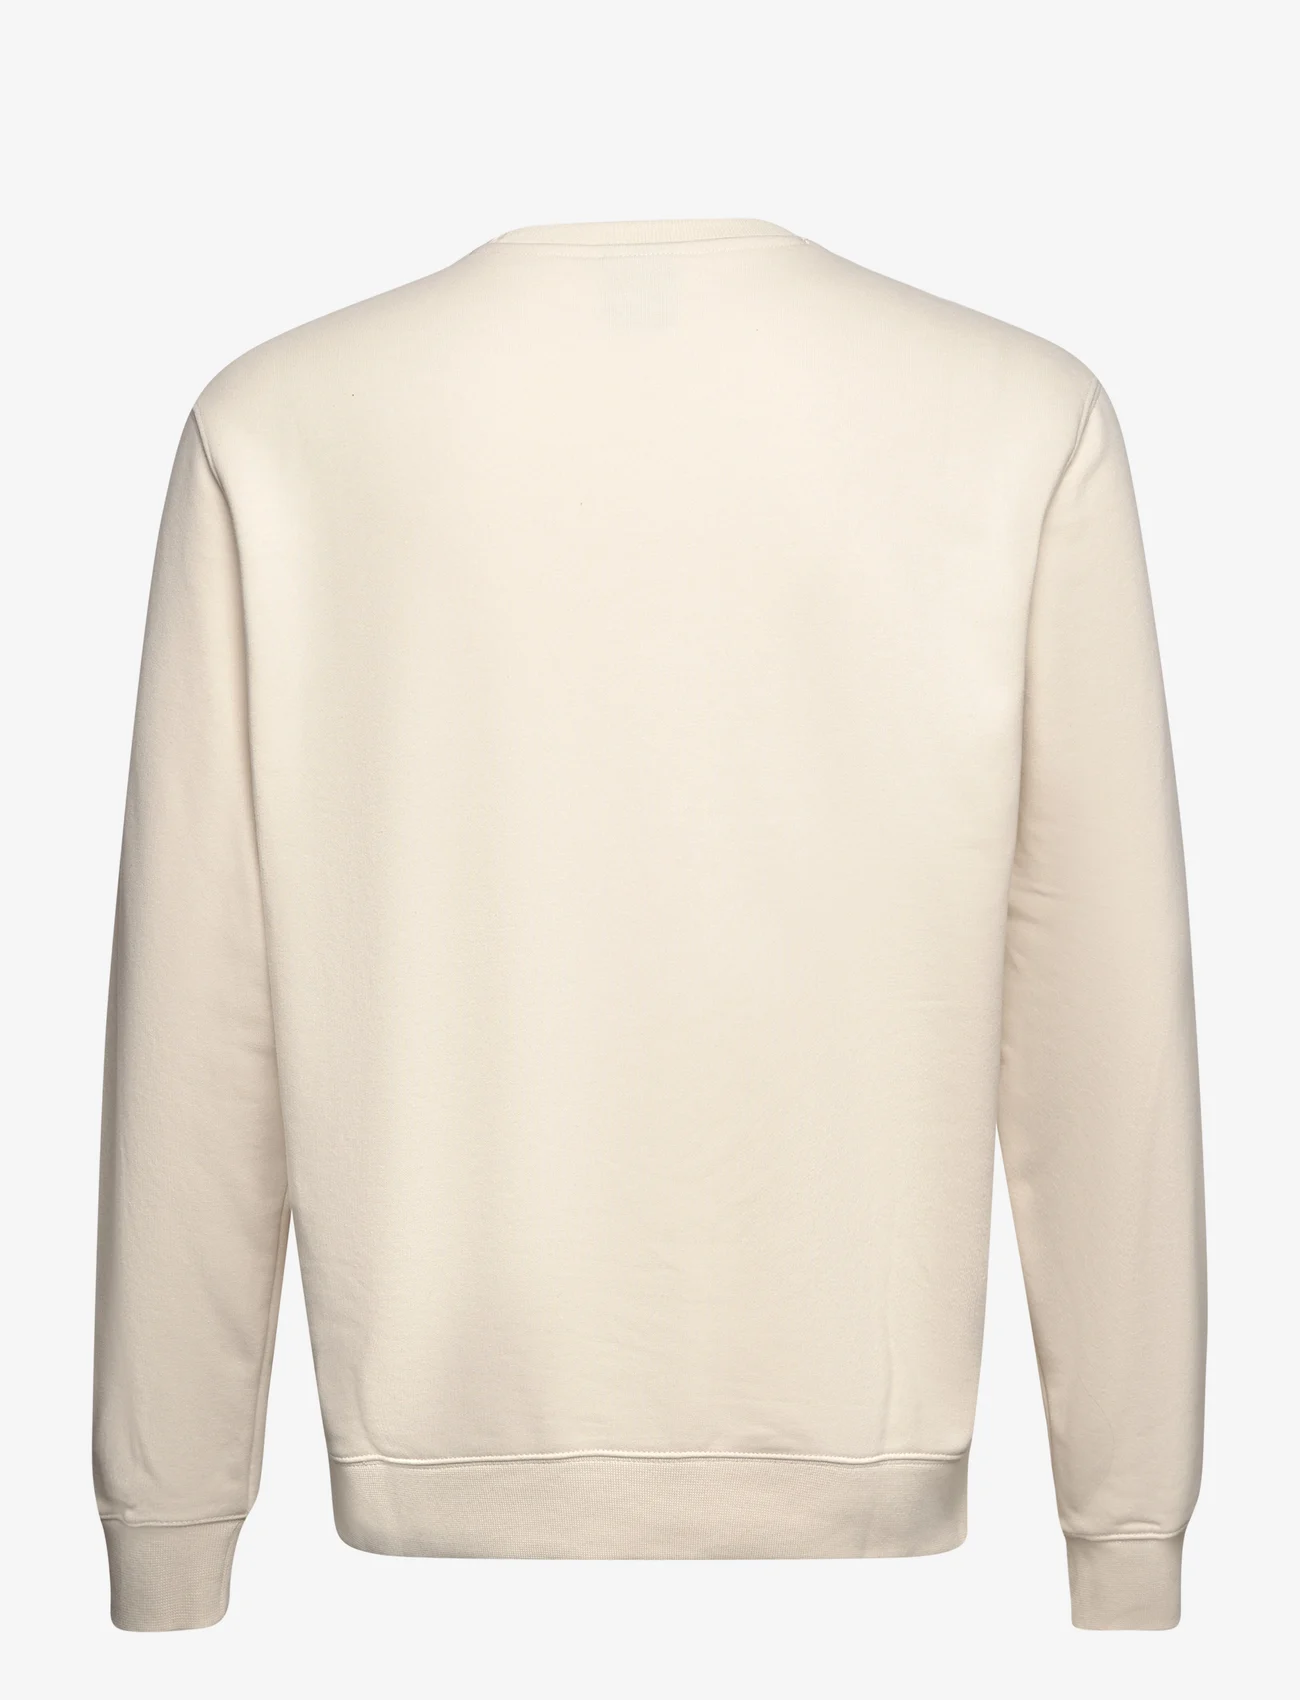 Champion - Crewneck Sweatshirt - bluzy z kapturem - whitecap gray - 1